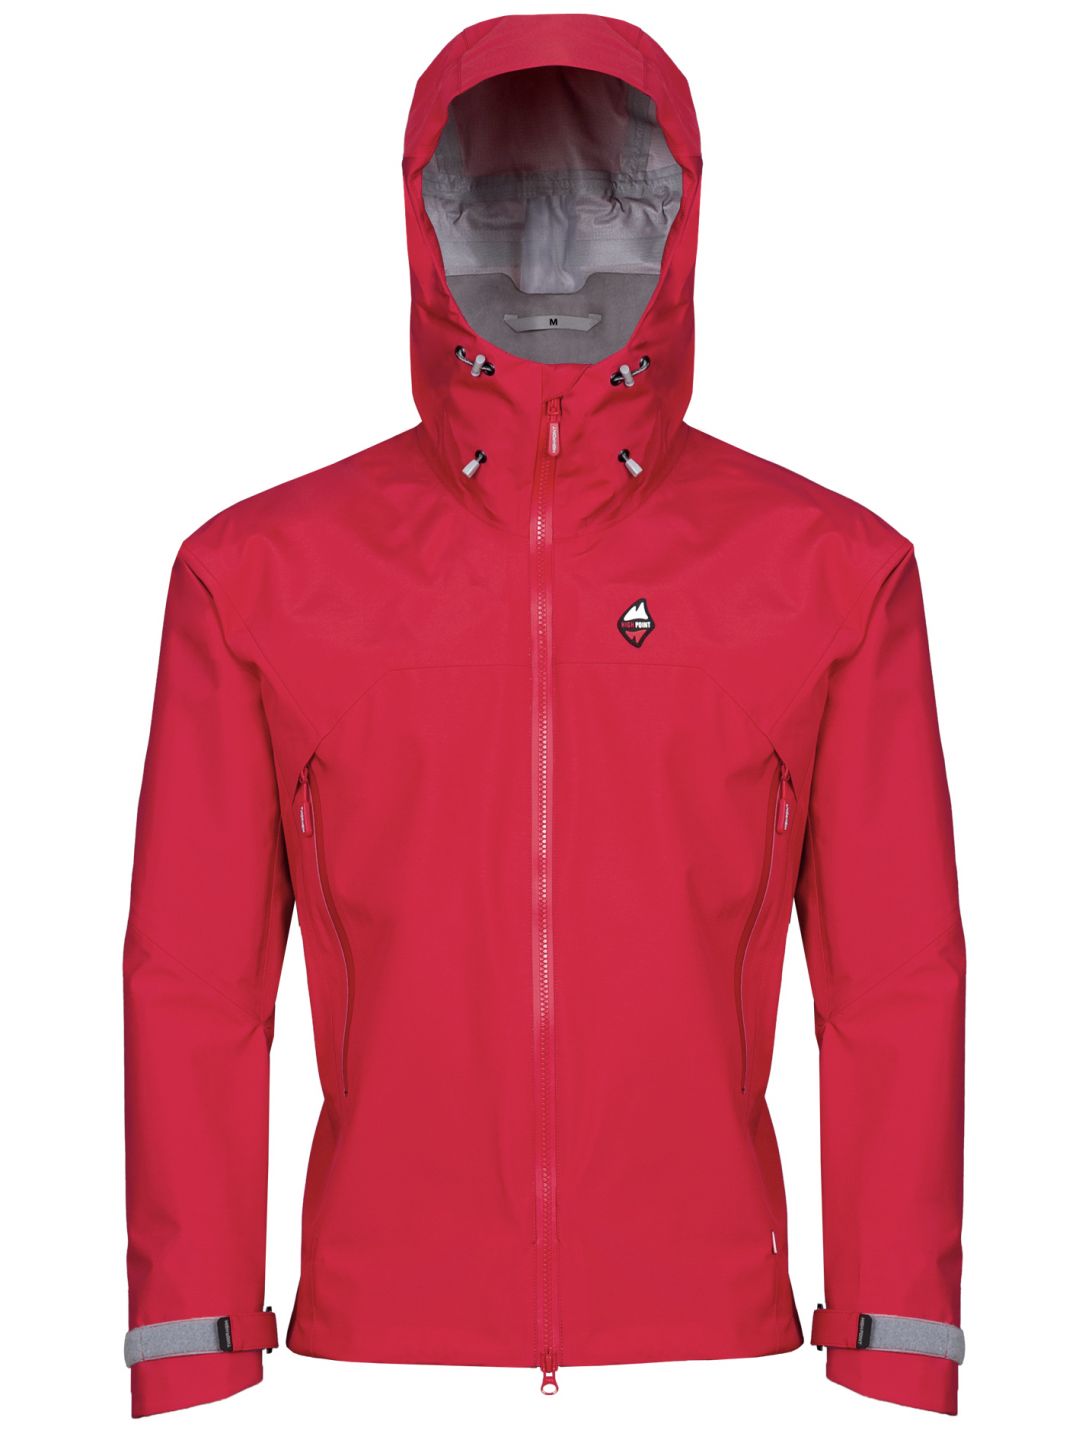 HIGH POINT PROTECTOR 7.0 jacket Red varianta: L